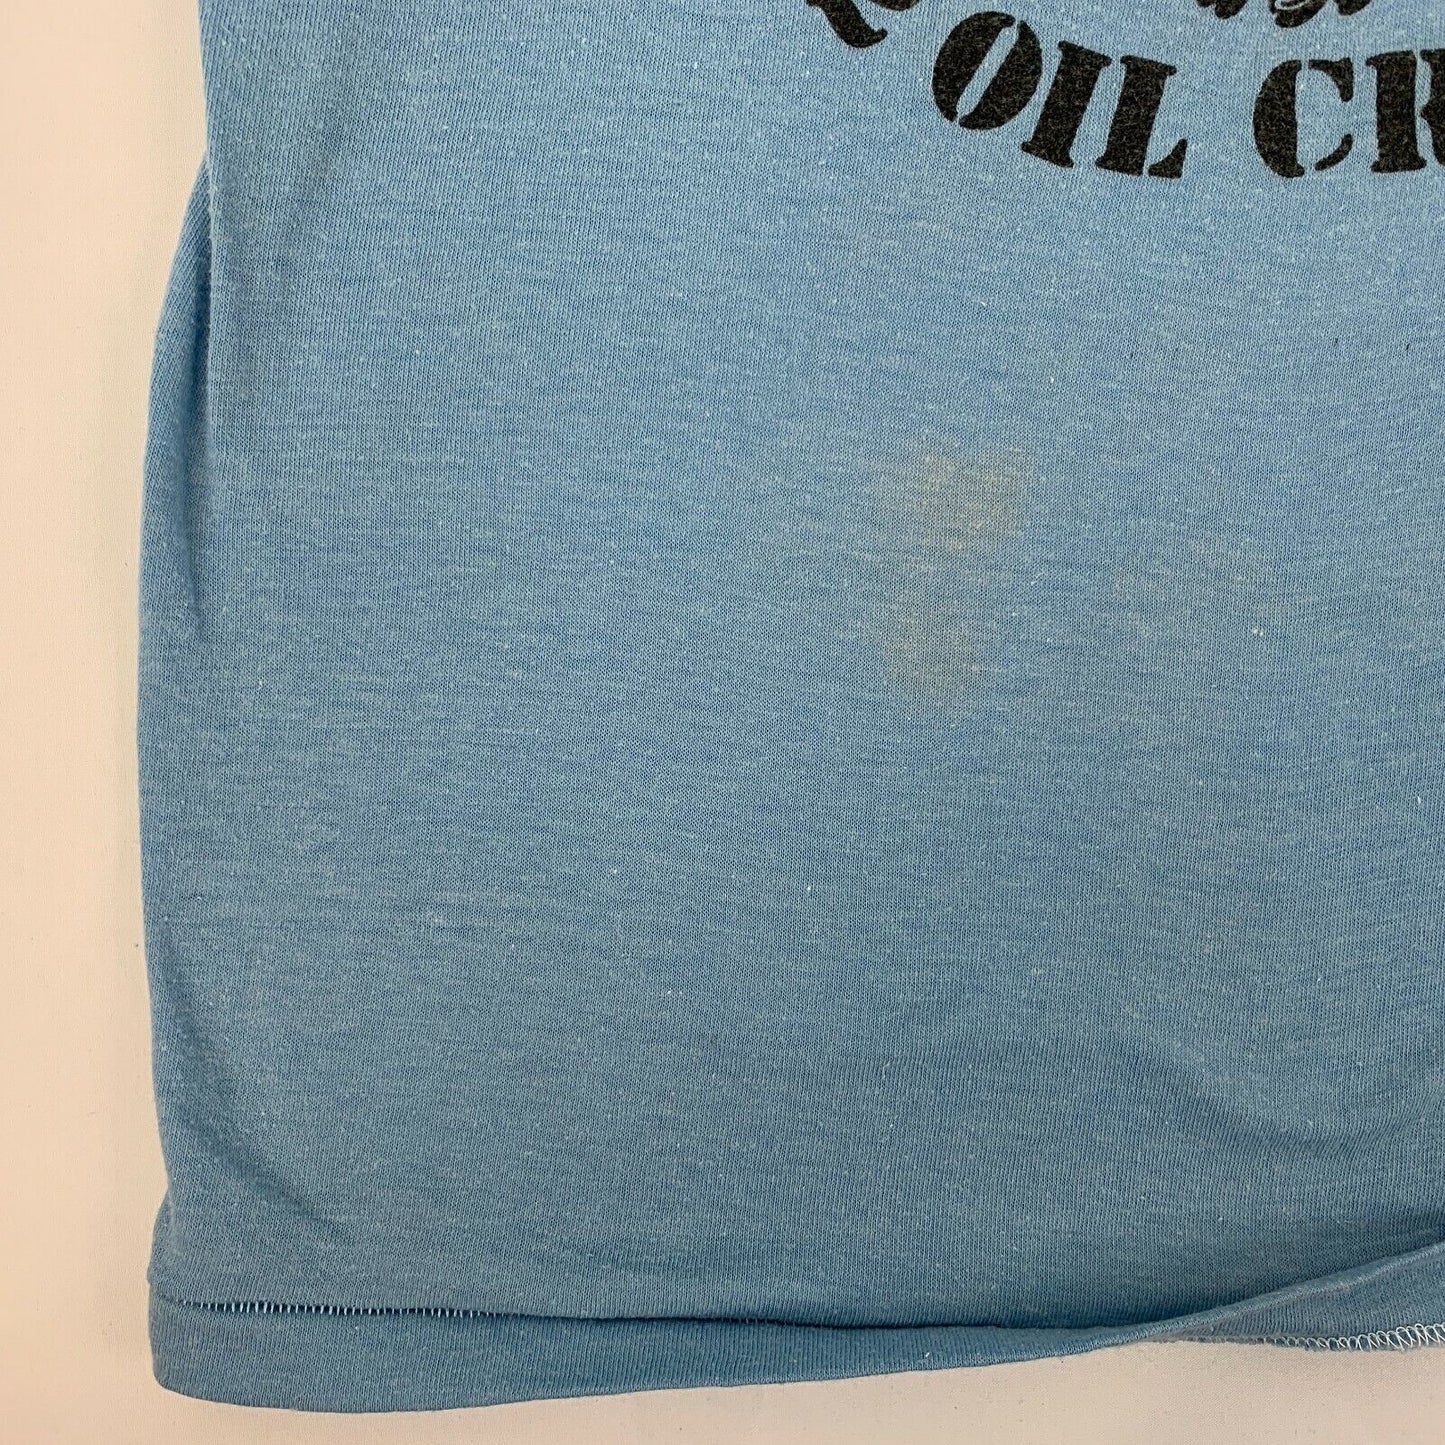 Survivor 1982 Oil Crunch Vintage 80s T Shirt Gas Petroleum Glut Texas Tee Small